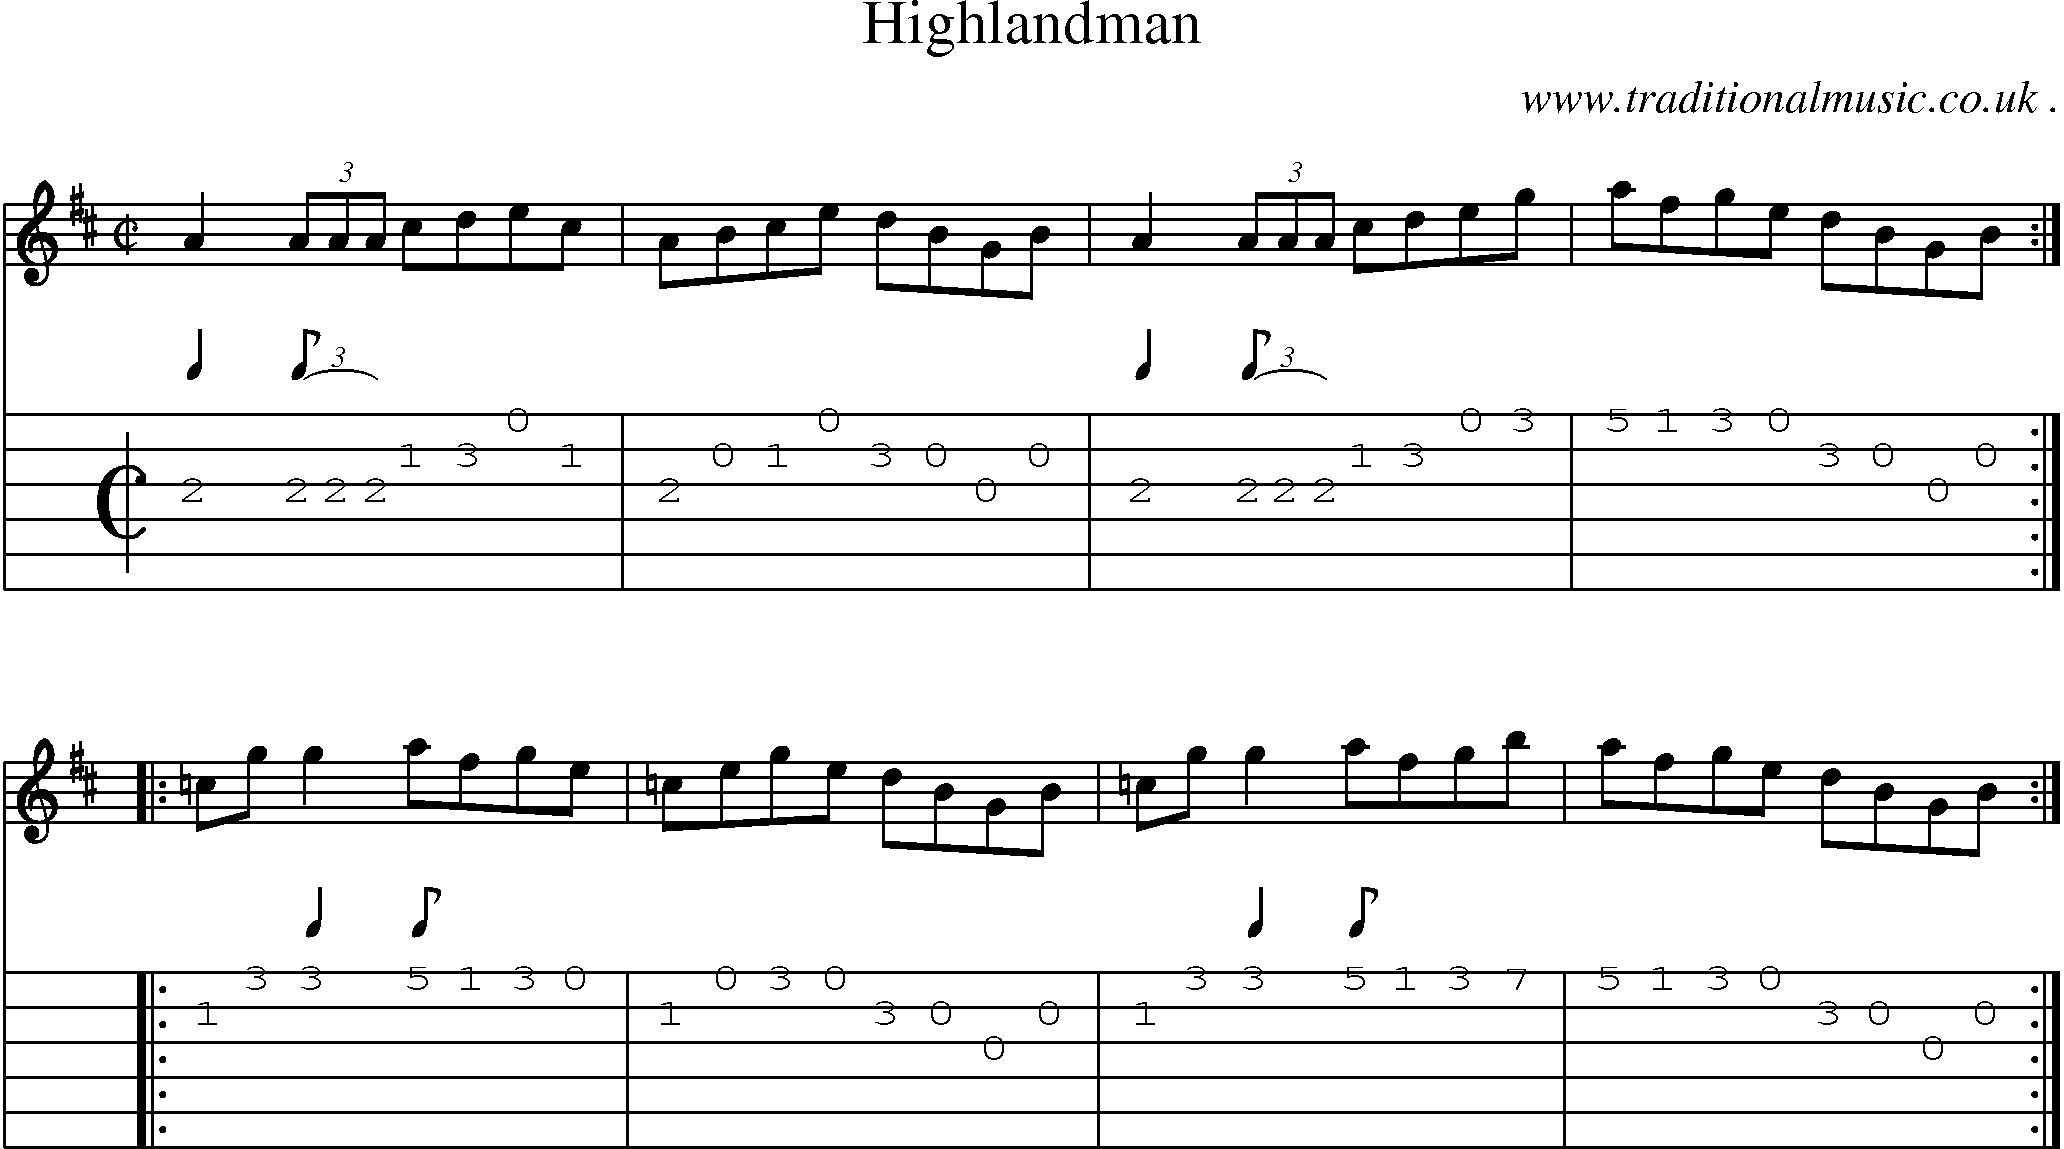 Sheet-Music and Guitar Tabs for Highlandman